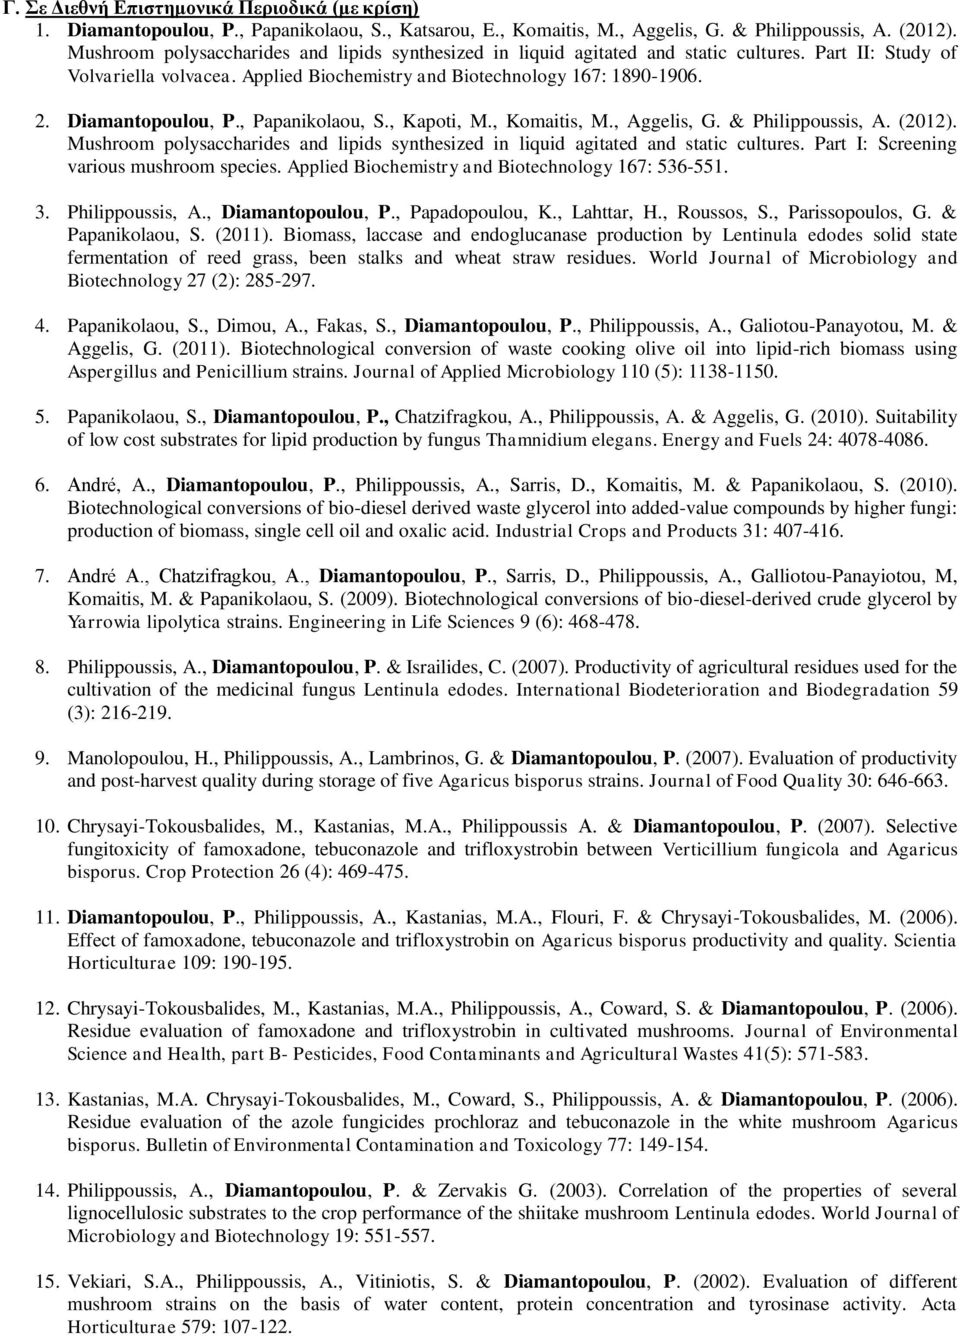 Diamantopoulou, P., Papanikolaou, S., Kapoti, M., Komaitis, M., Aggelis, G. & Philippoussis, A. (2012). Mushroom polysaccharides and lipids synthesized in liquid agitated and static cultures.